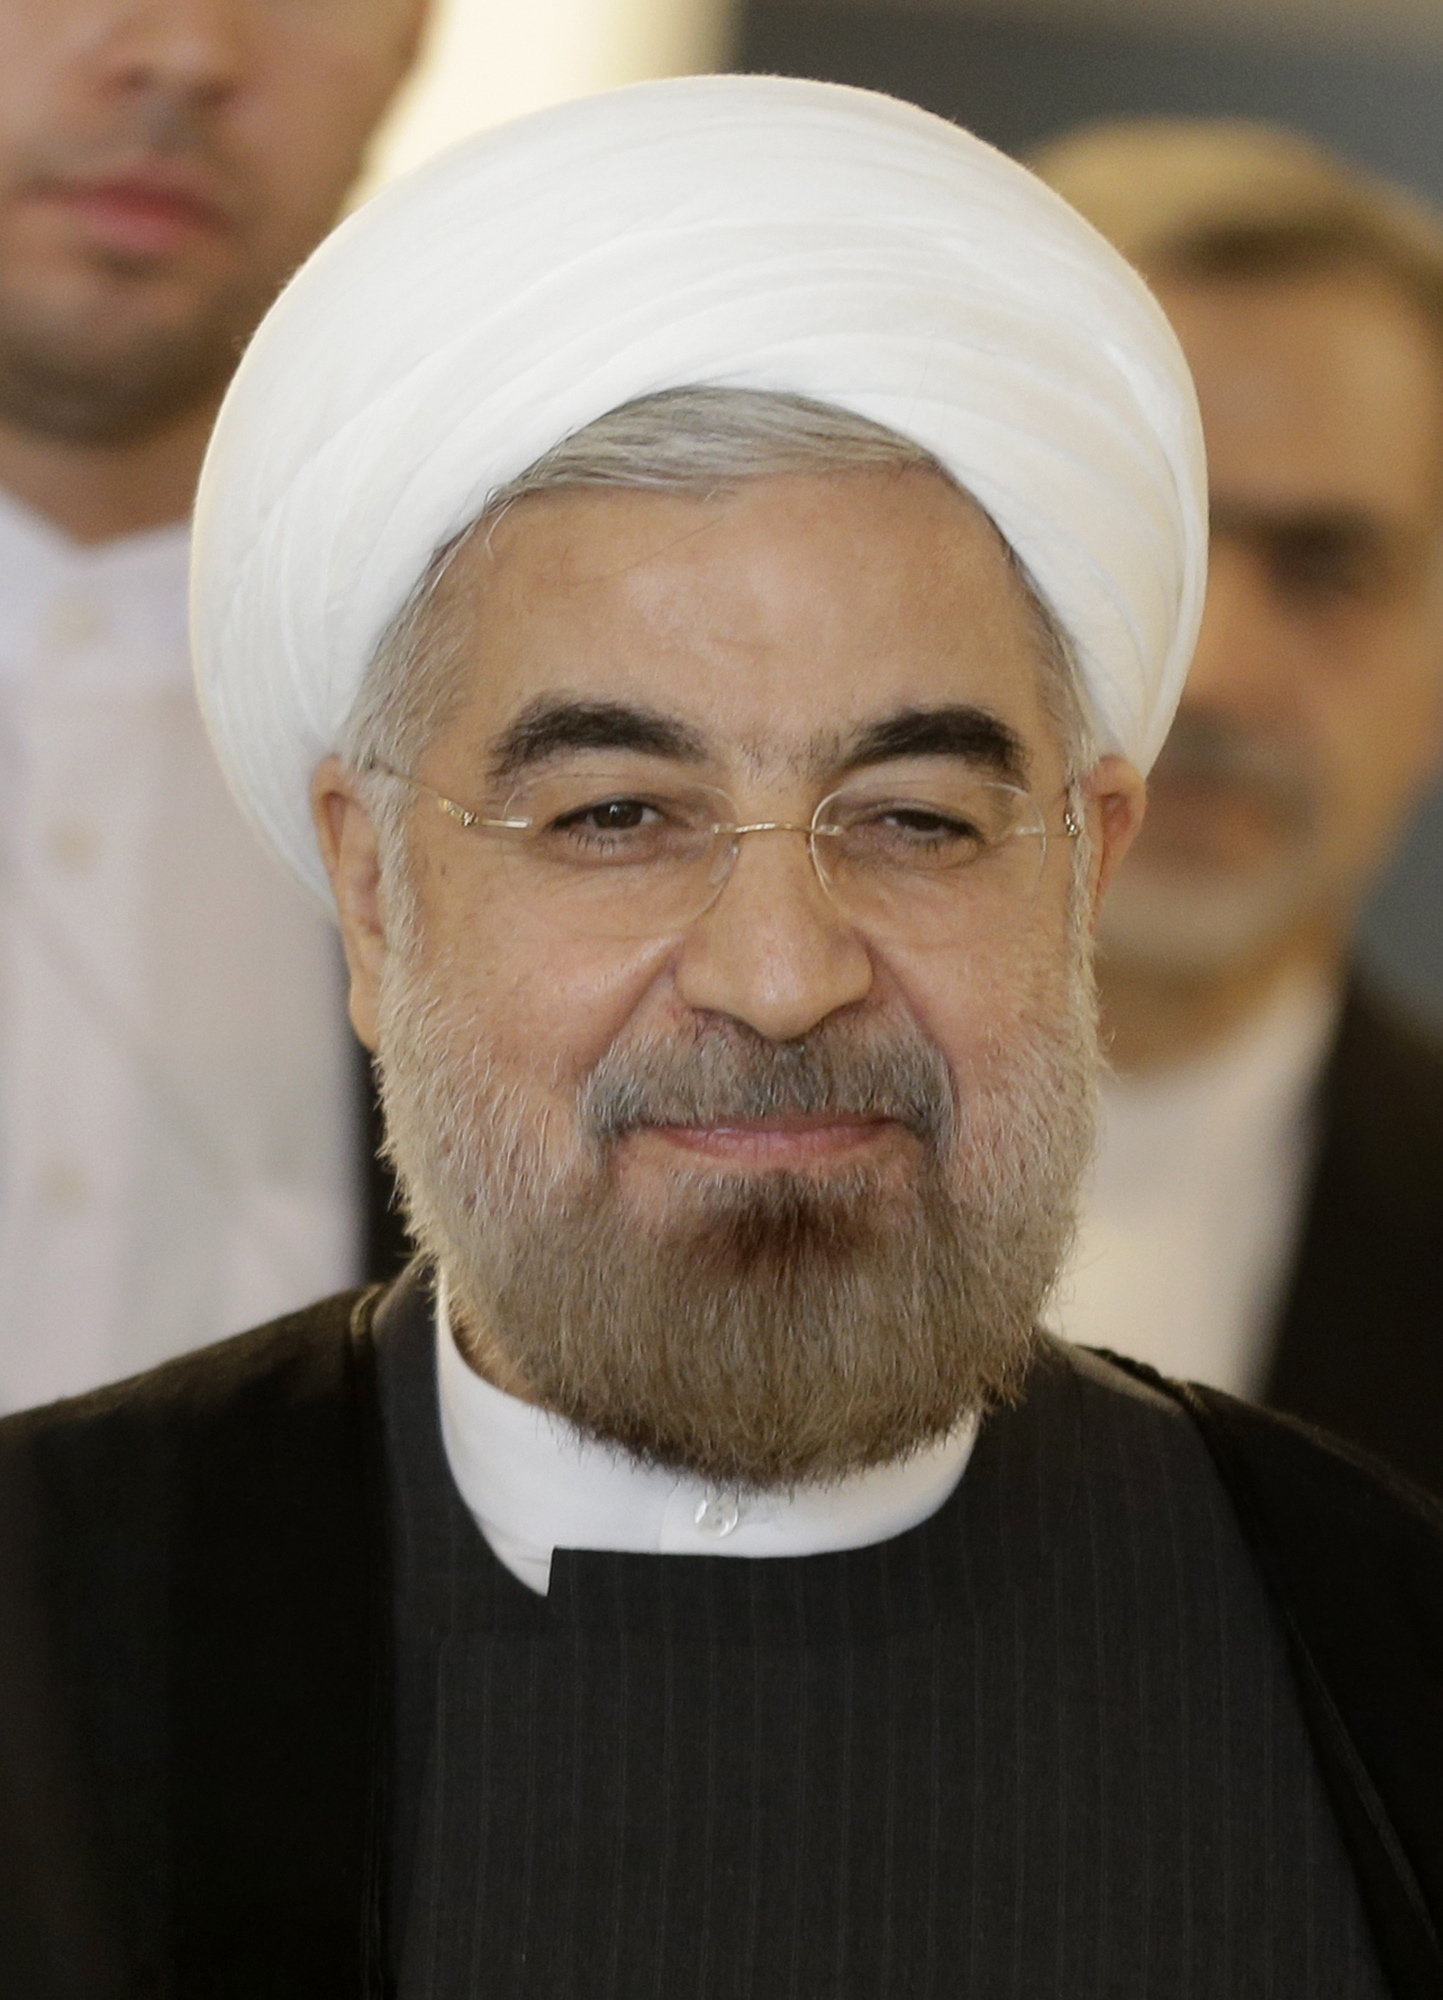 Hassan Rouhani
Iranian president